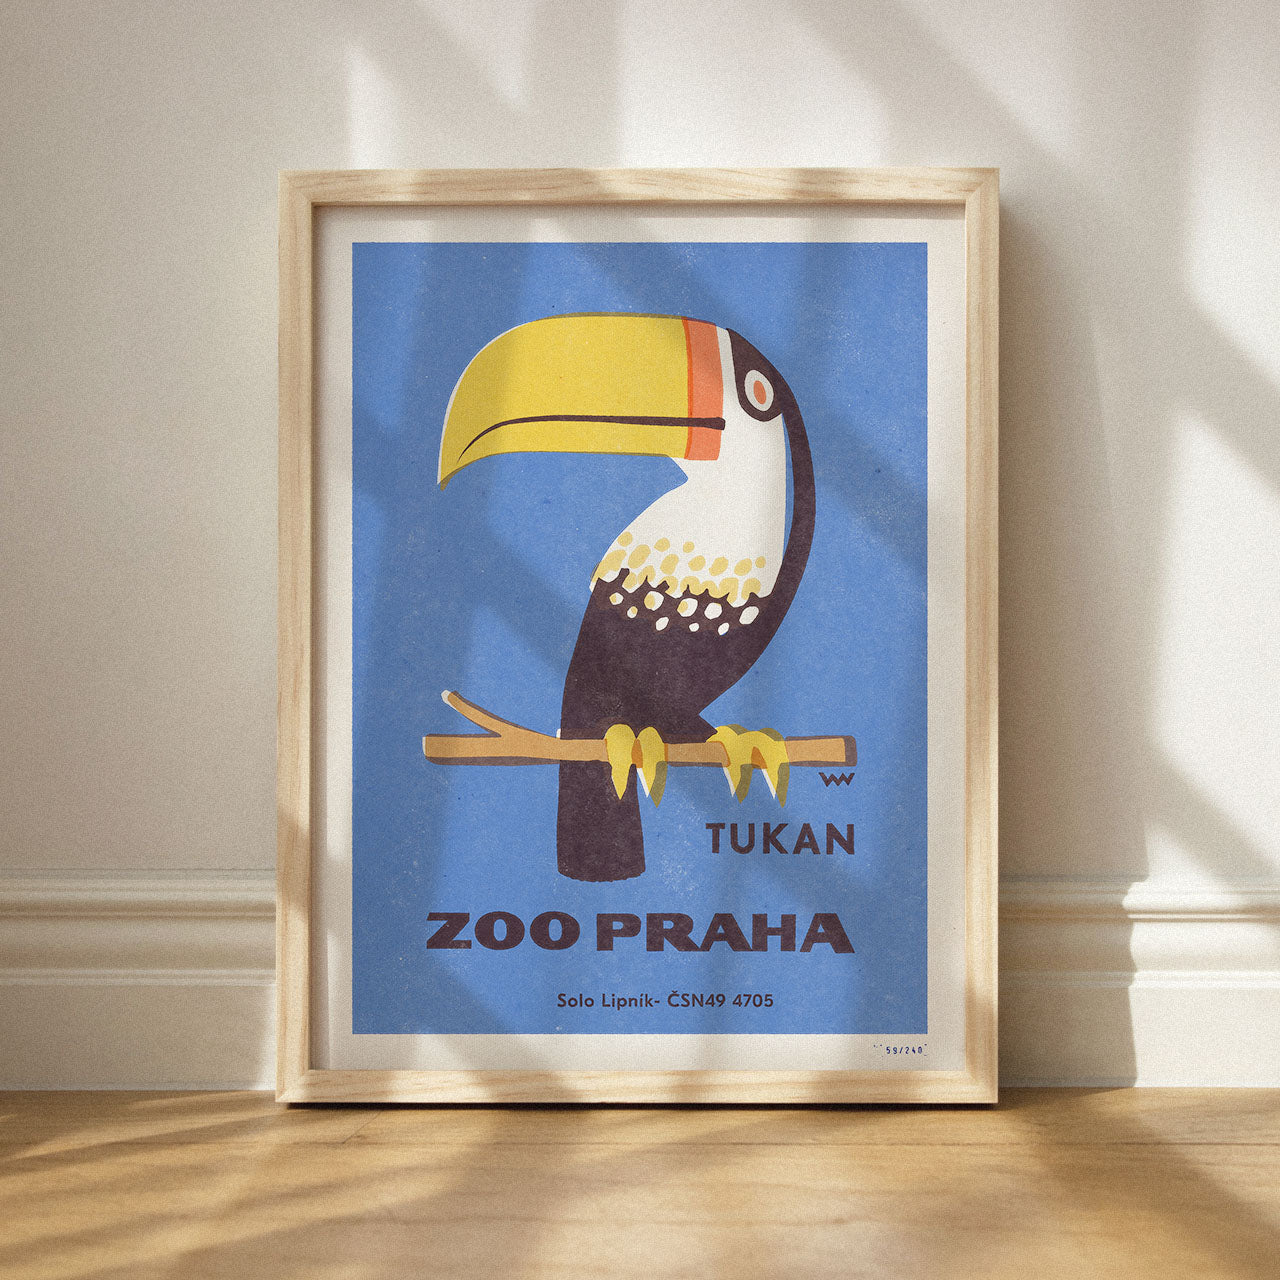 Prague Zoo - Toucan - Poster 30x40 cm 